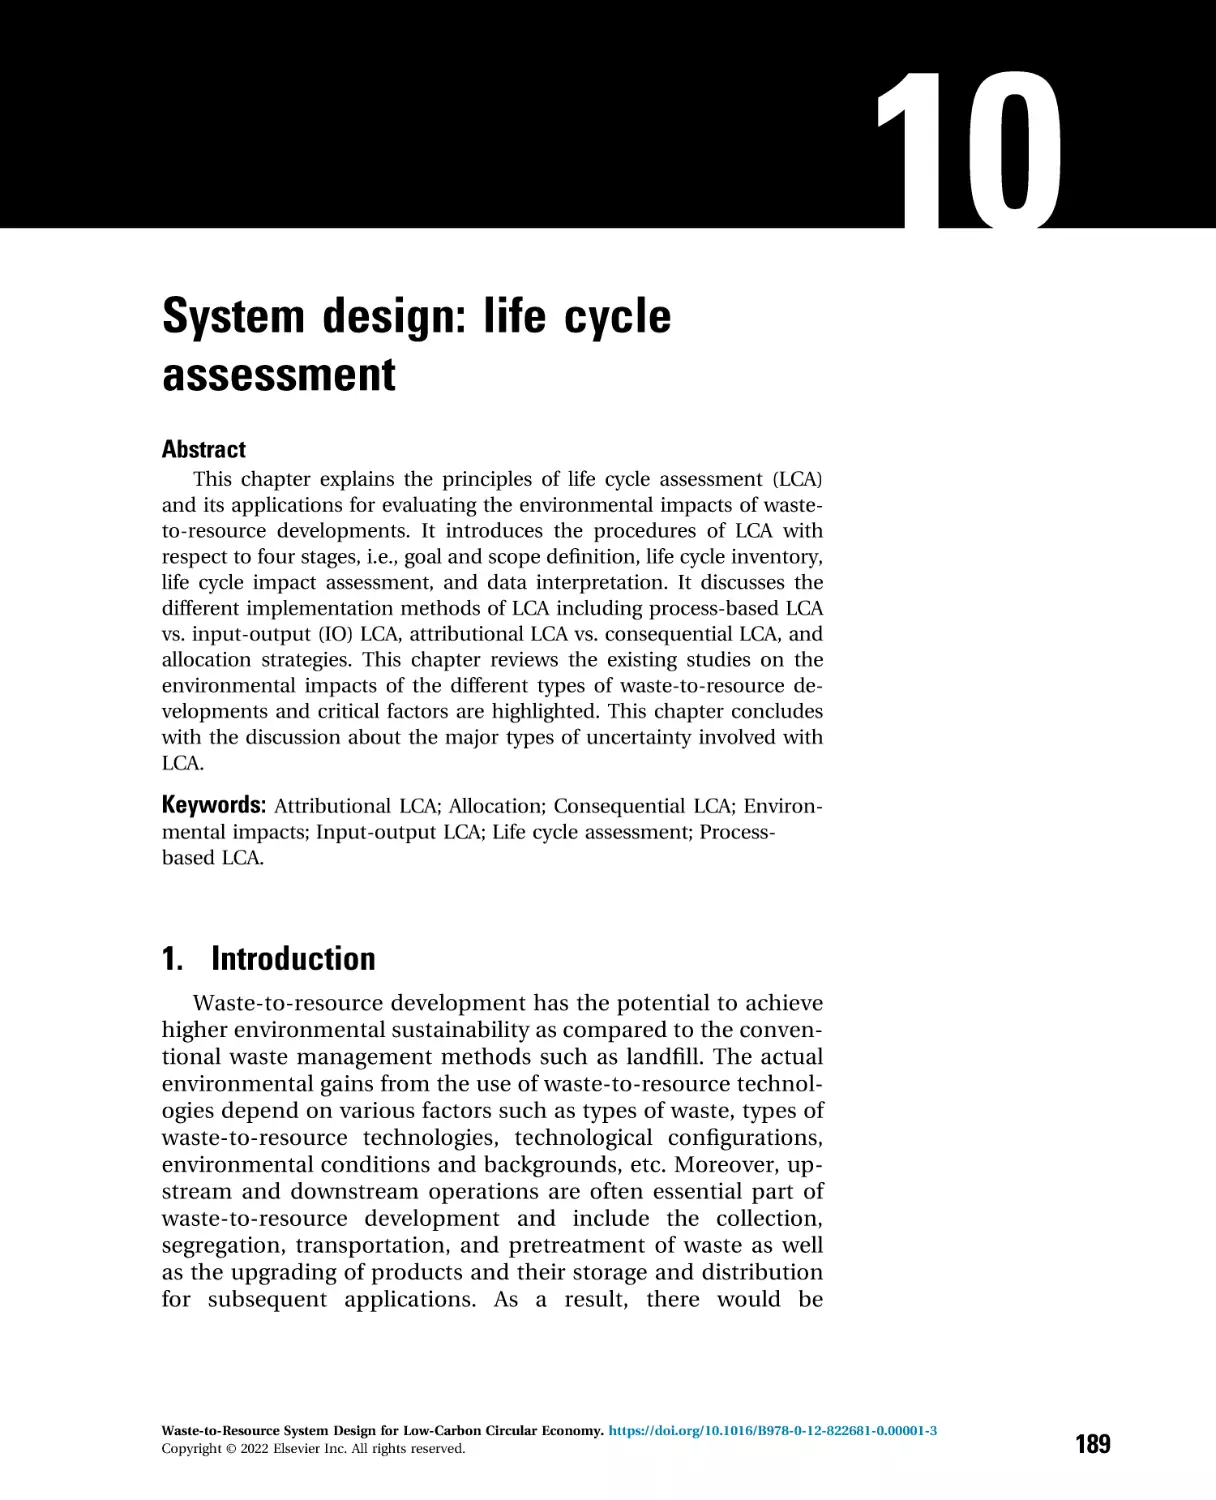 10 - System design
1. Introduction